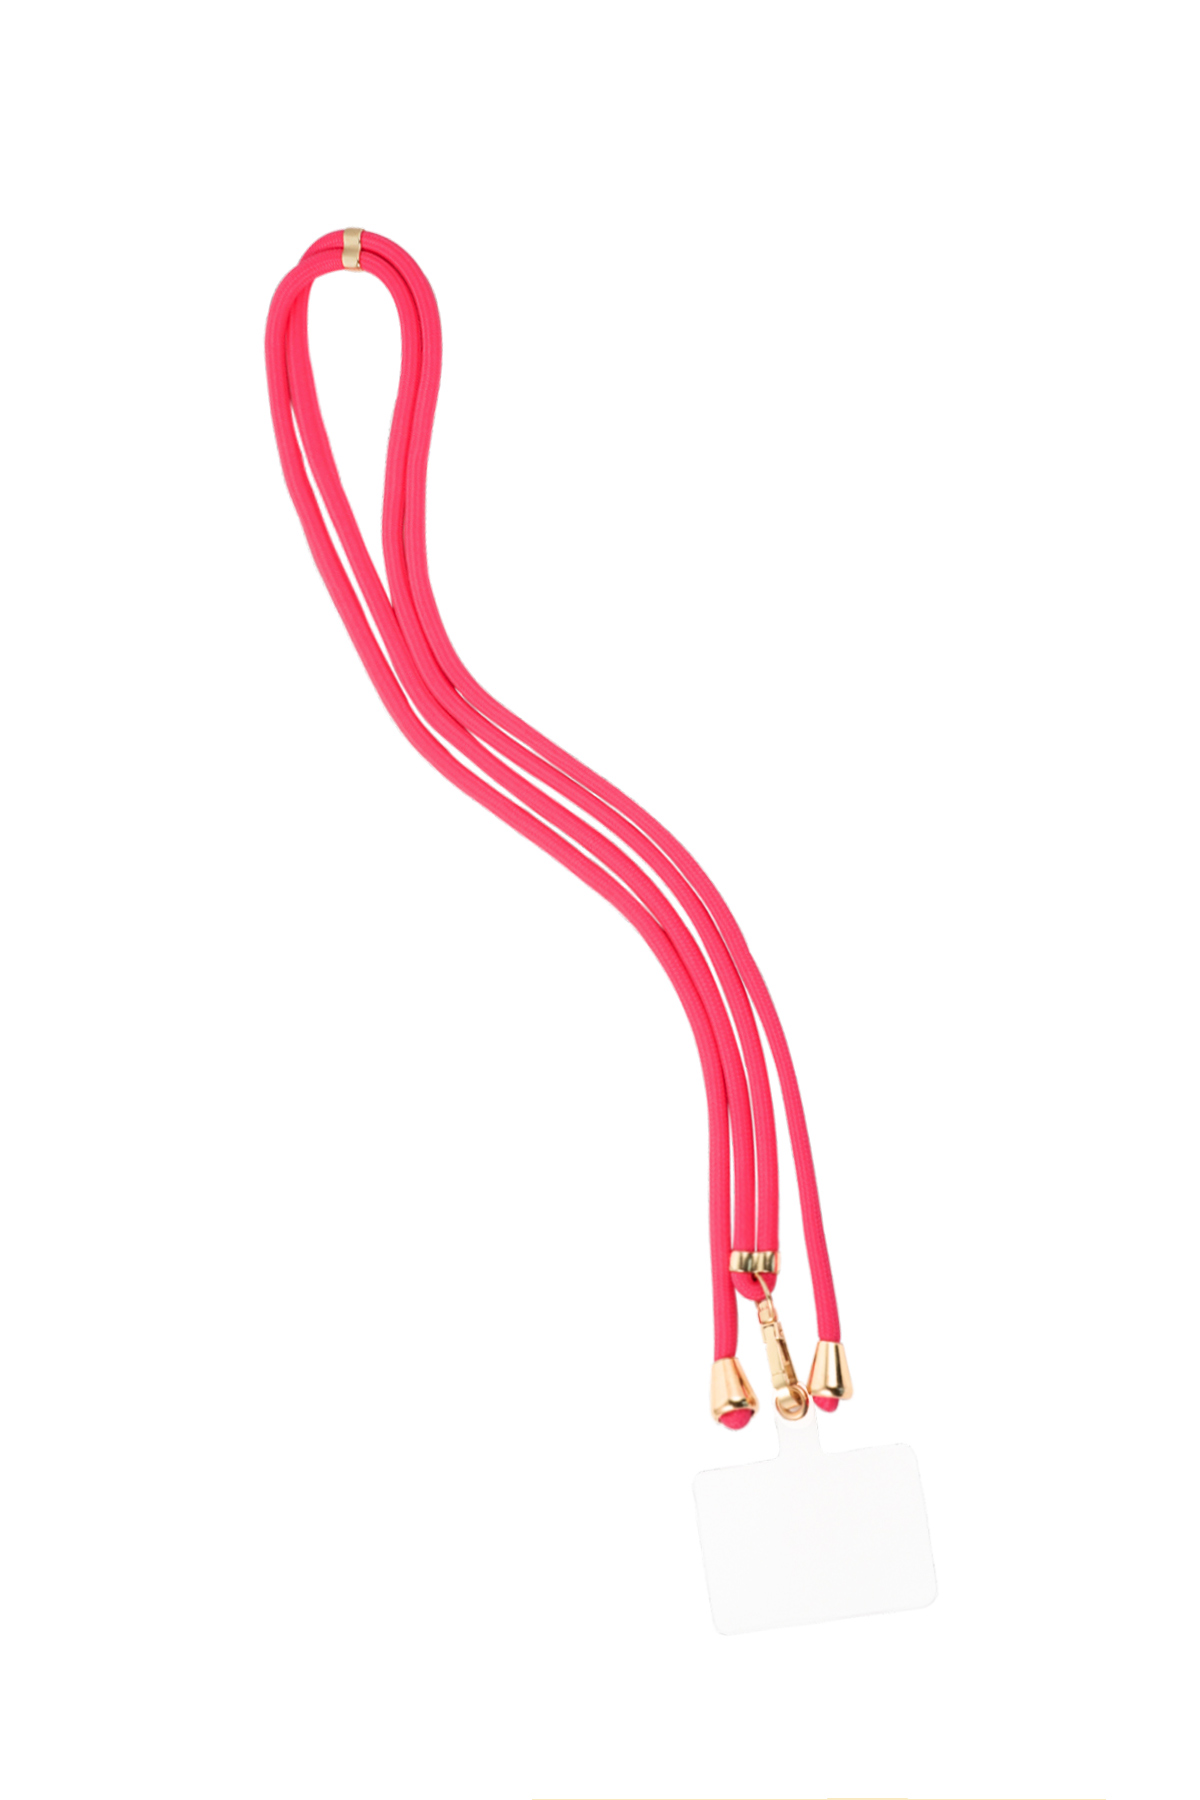 Telephone cord subtle print - pink 